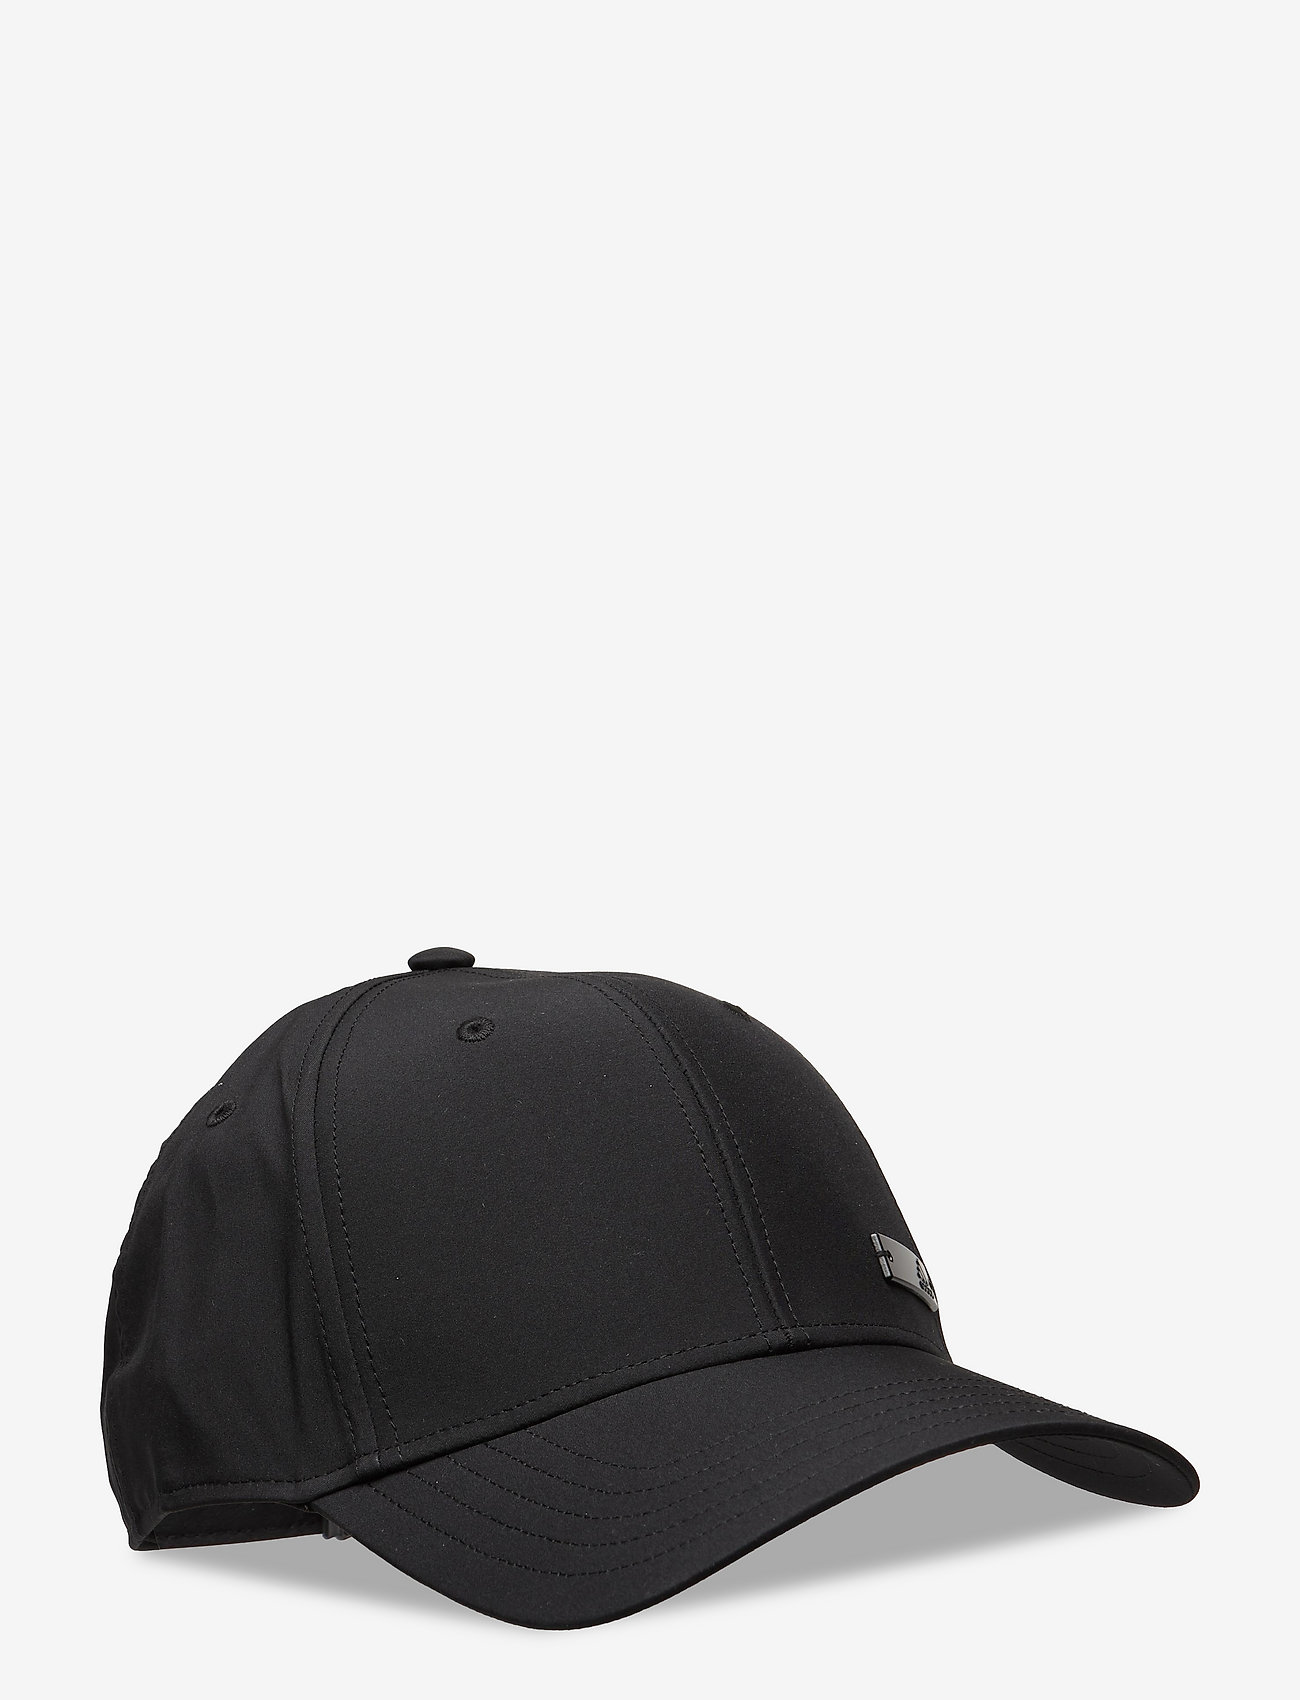 adidas Performance - Lightweight Metal Badge Baseball Cap - black/black/black - 0